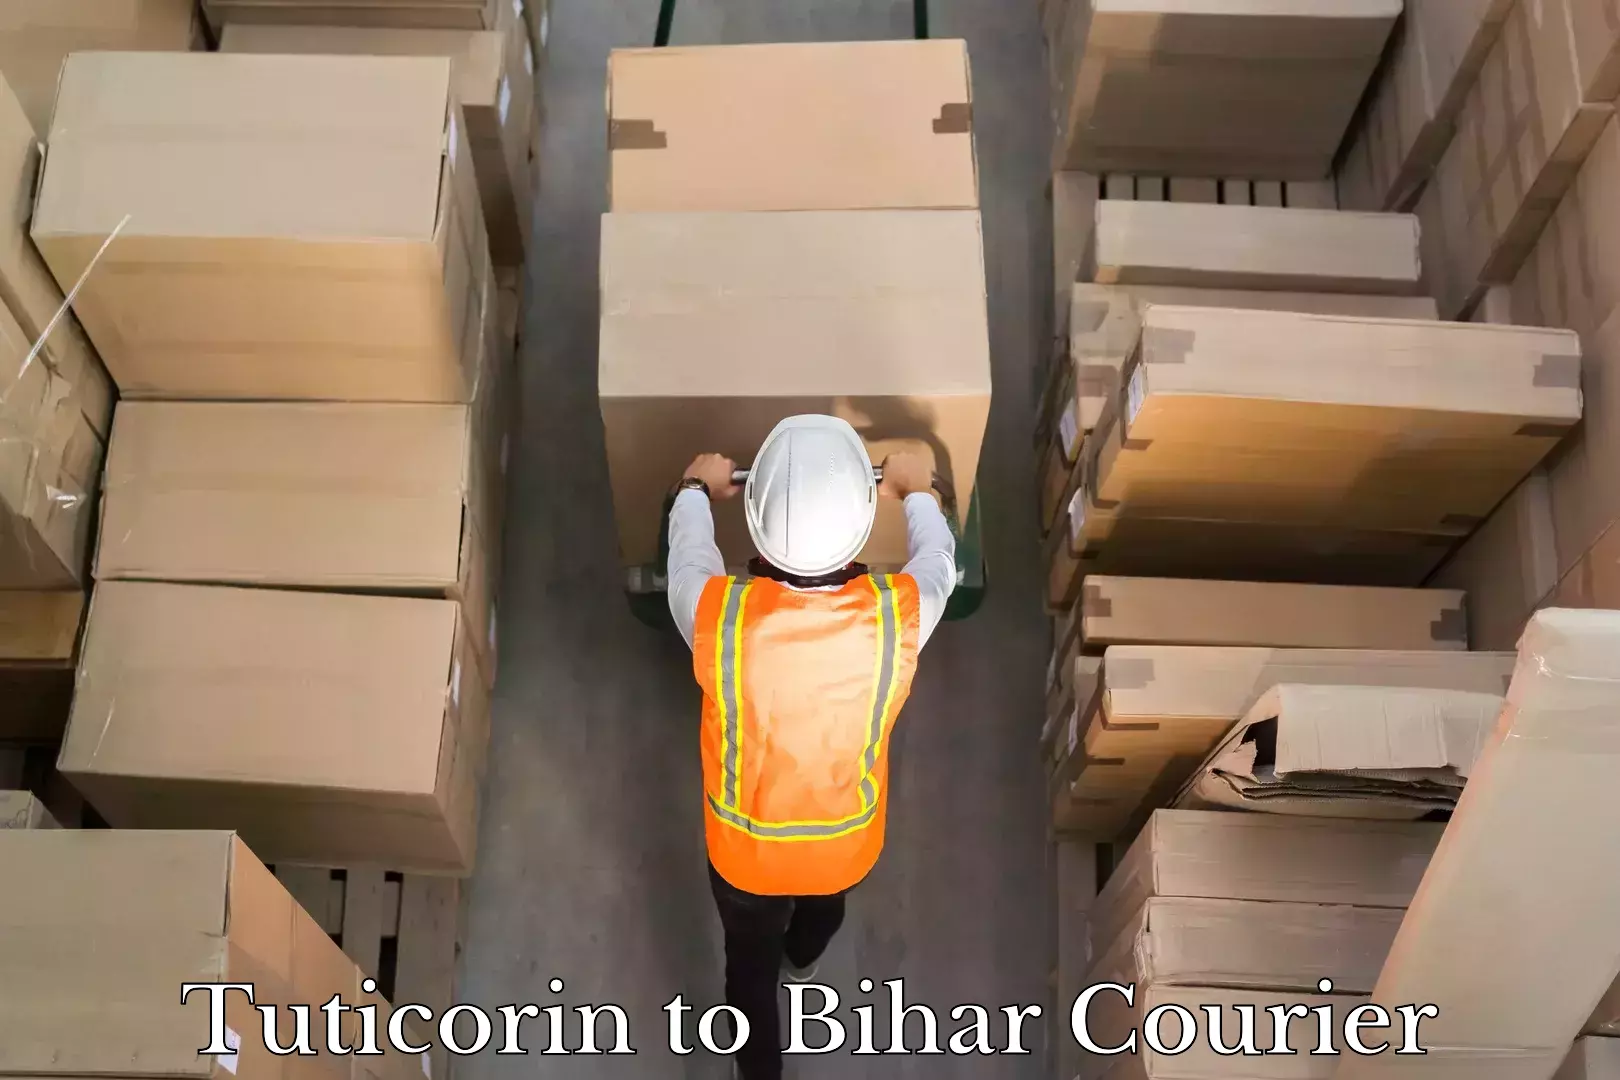 Courier service innovation Tuticorin to Bihar